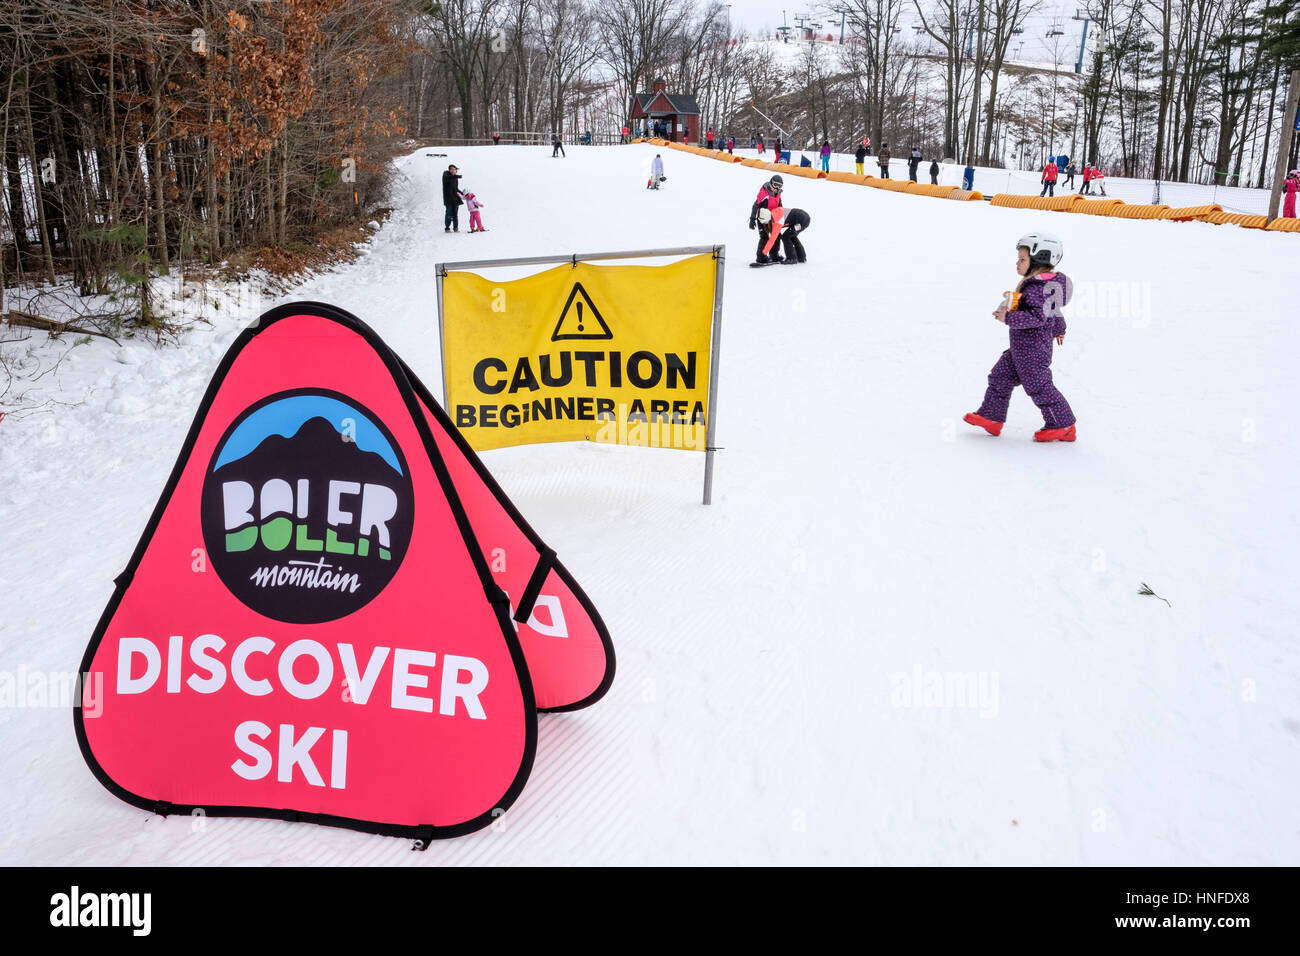 Boler Mountain Ski Club ski learning area reserved for beginners, London, Ontario, Canada. Stock Photo